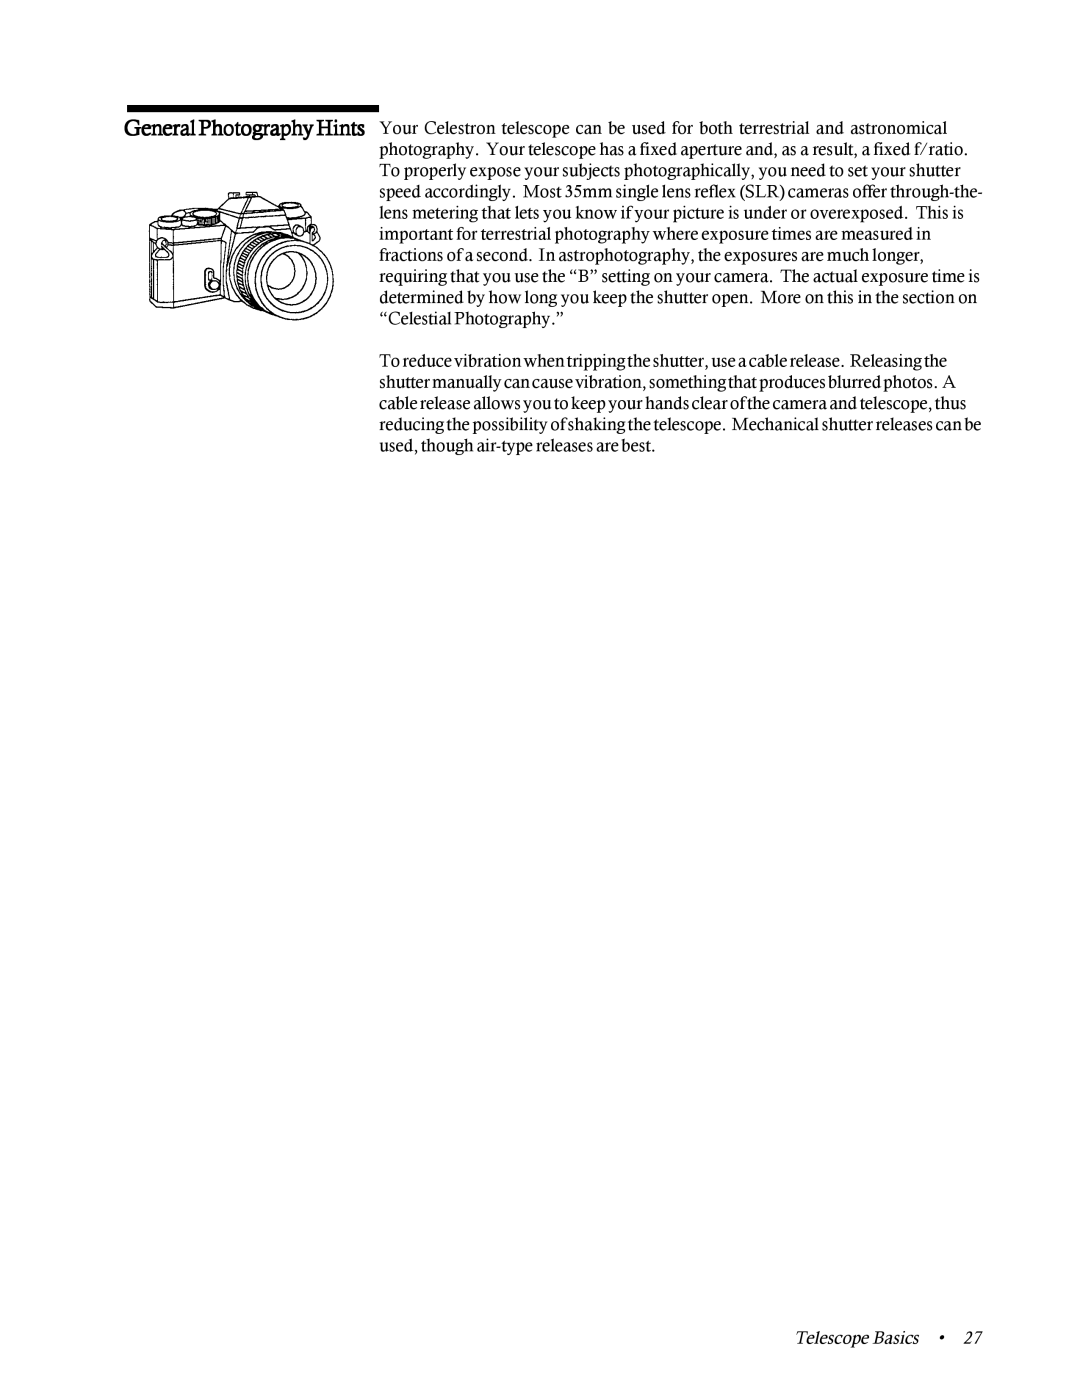 Celestron CR-150 HD instruction manual Telescope Basics 